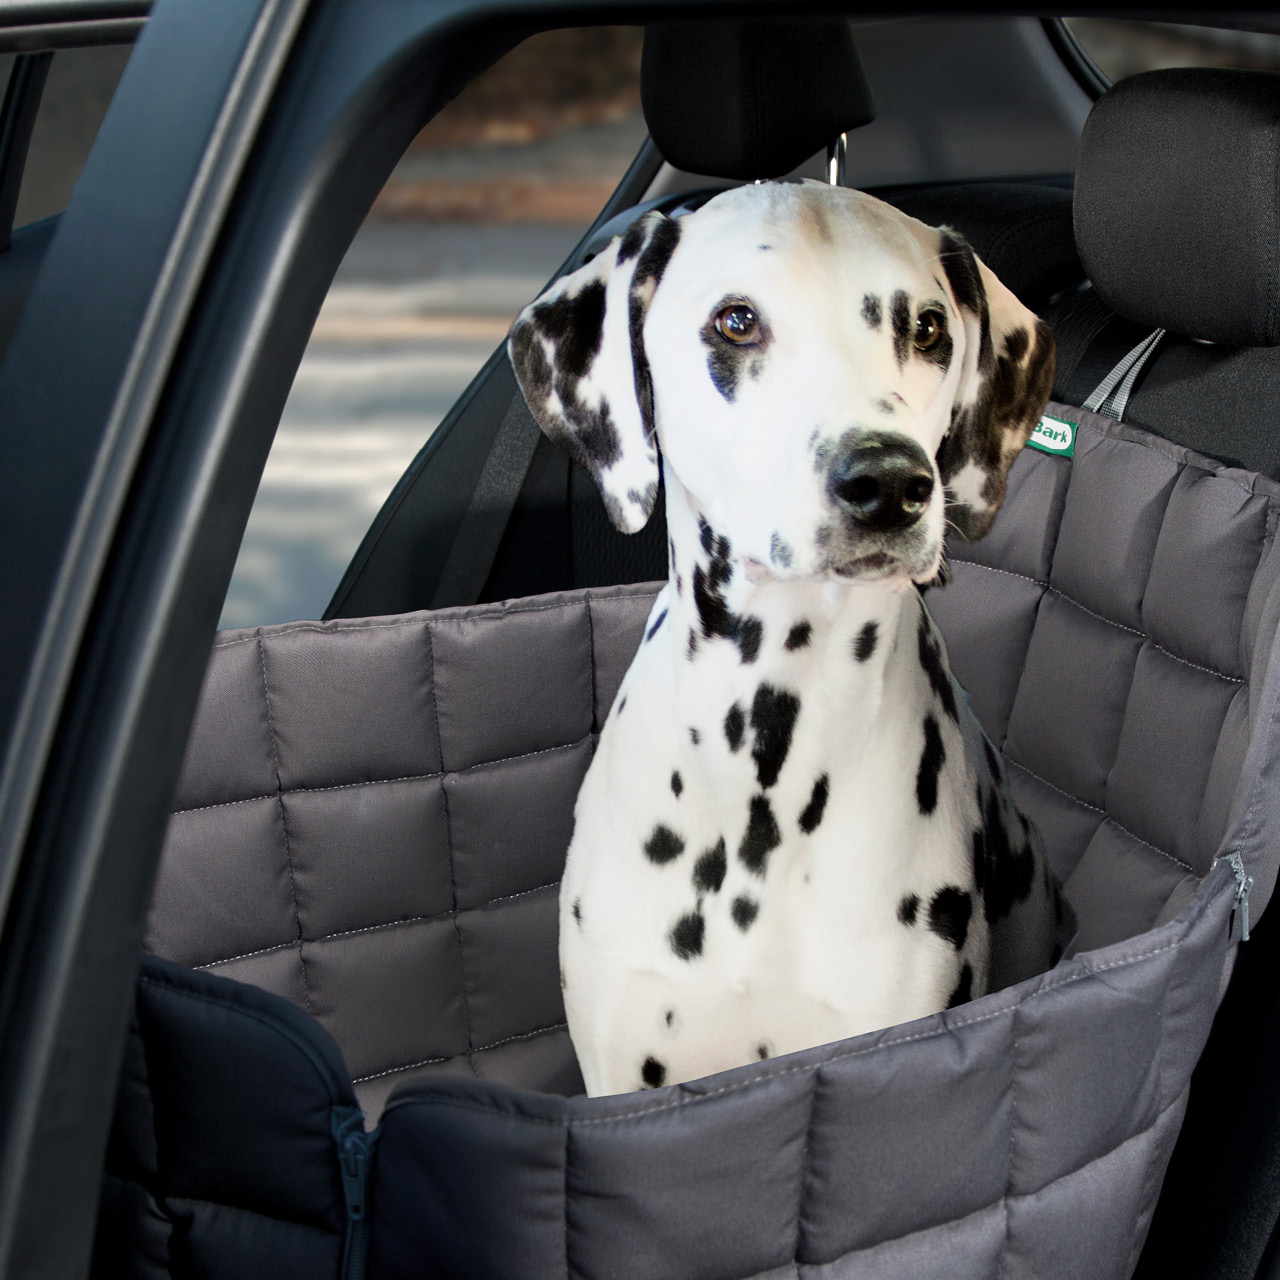 Doctor Bark - Autoschondecke für Hunde - Rückbank 1-Sitz Gr. L - grau